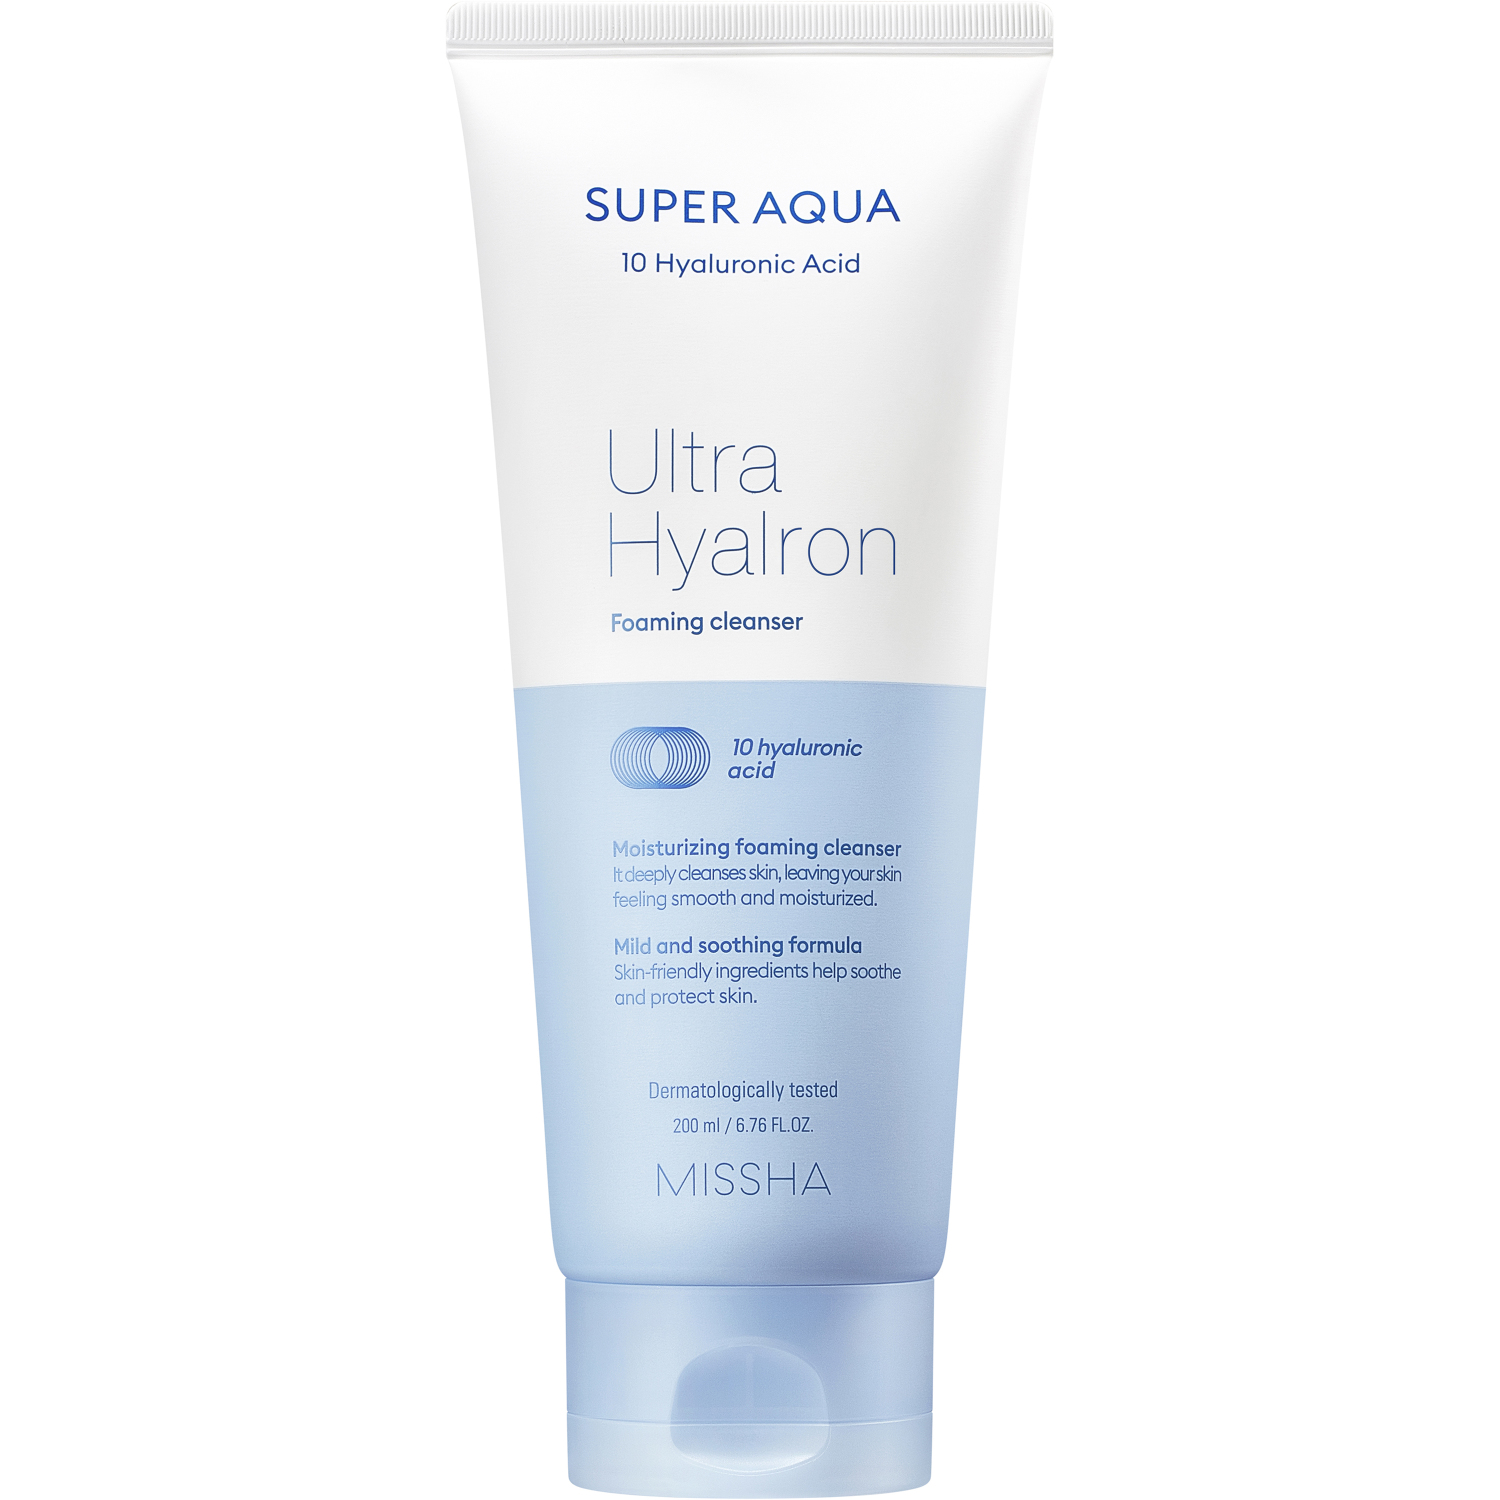 Пенка Missha Super Aqua Ultra Hyalron для умывания и снятия макияжа, 200 мл пенка для умывания bioaqua очищающая с алоэ вера 100 мл